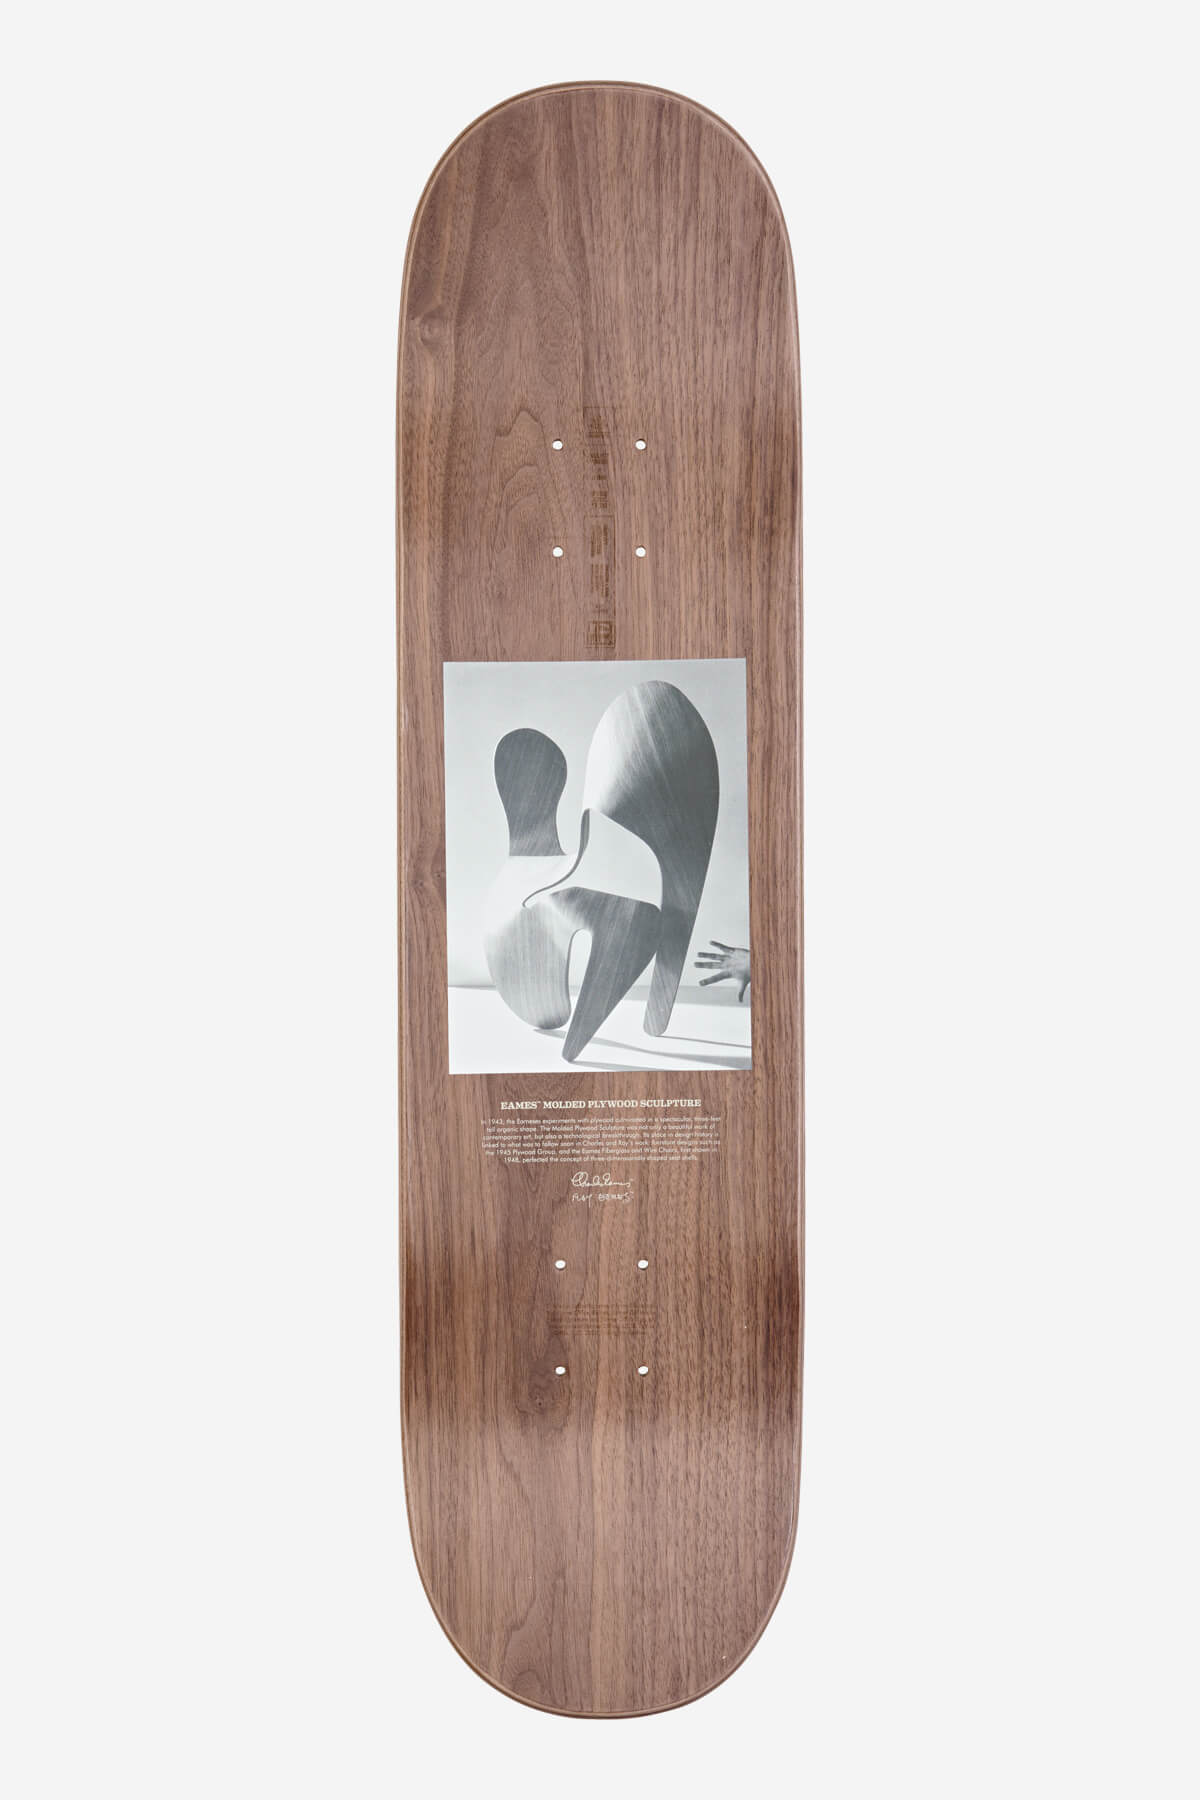 Globe - Silueta Eames - Plywood Sculpture - 8.0" Skateboard Deck